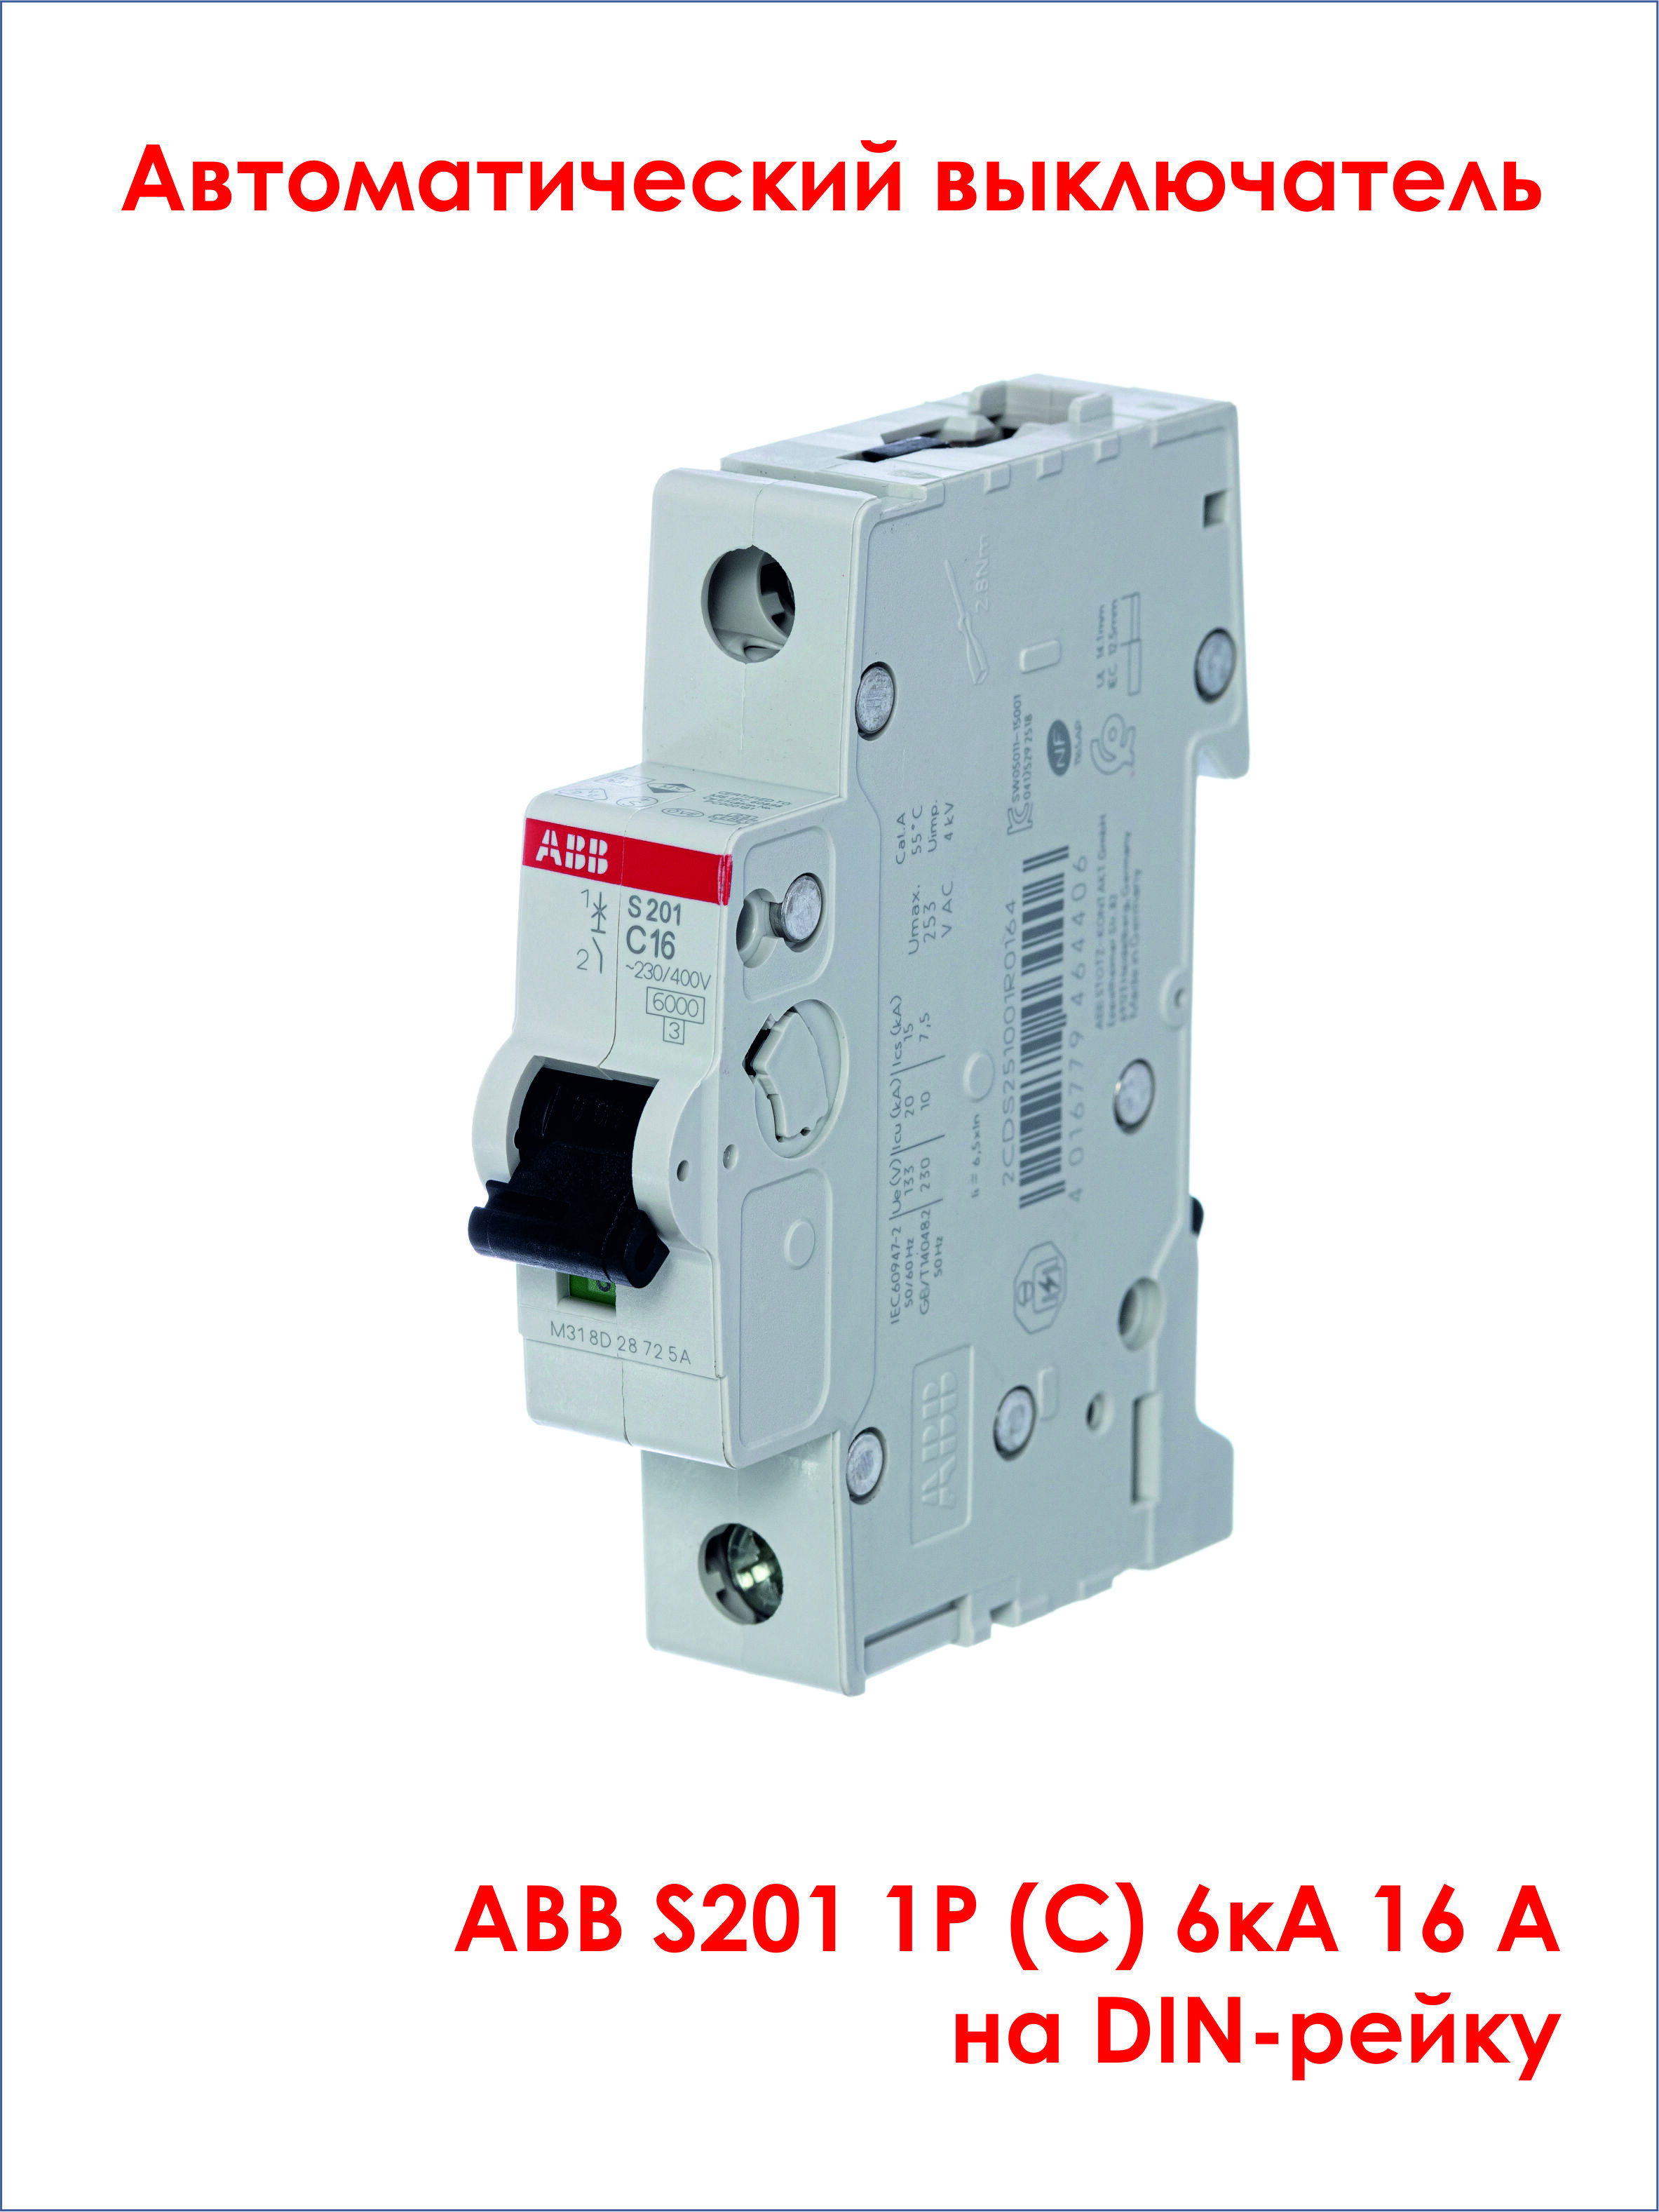 Дифференциальный автоматический выключатель abb. ABB диф автомат dsh201r c16 ac30. Автомат ABB dsh201r c20 ac30. Дифф автомат ABB ds201 c20 a30. Автоматический выключатель ABB 16а.